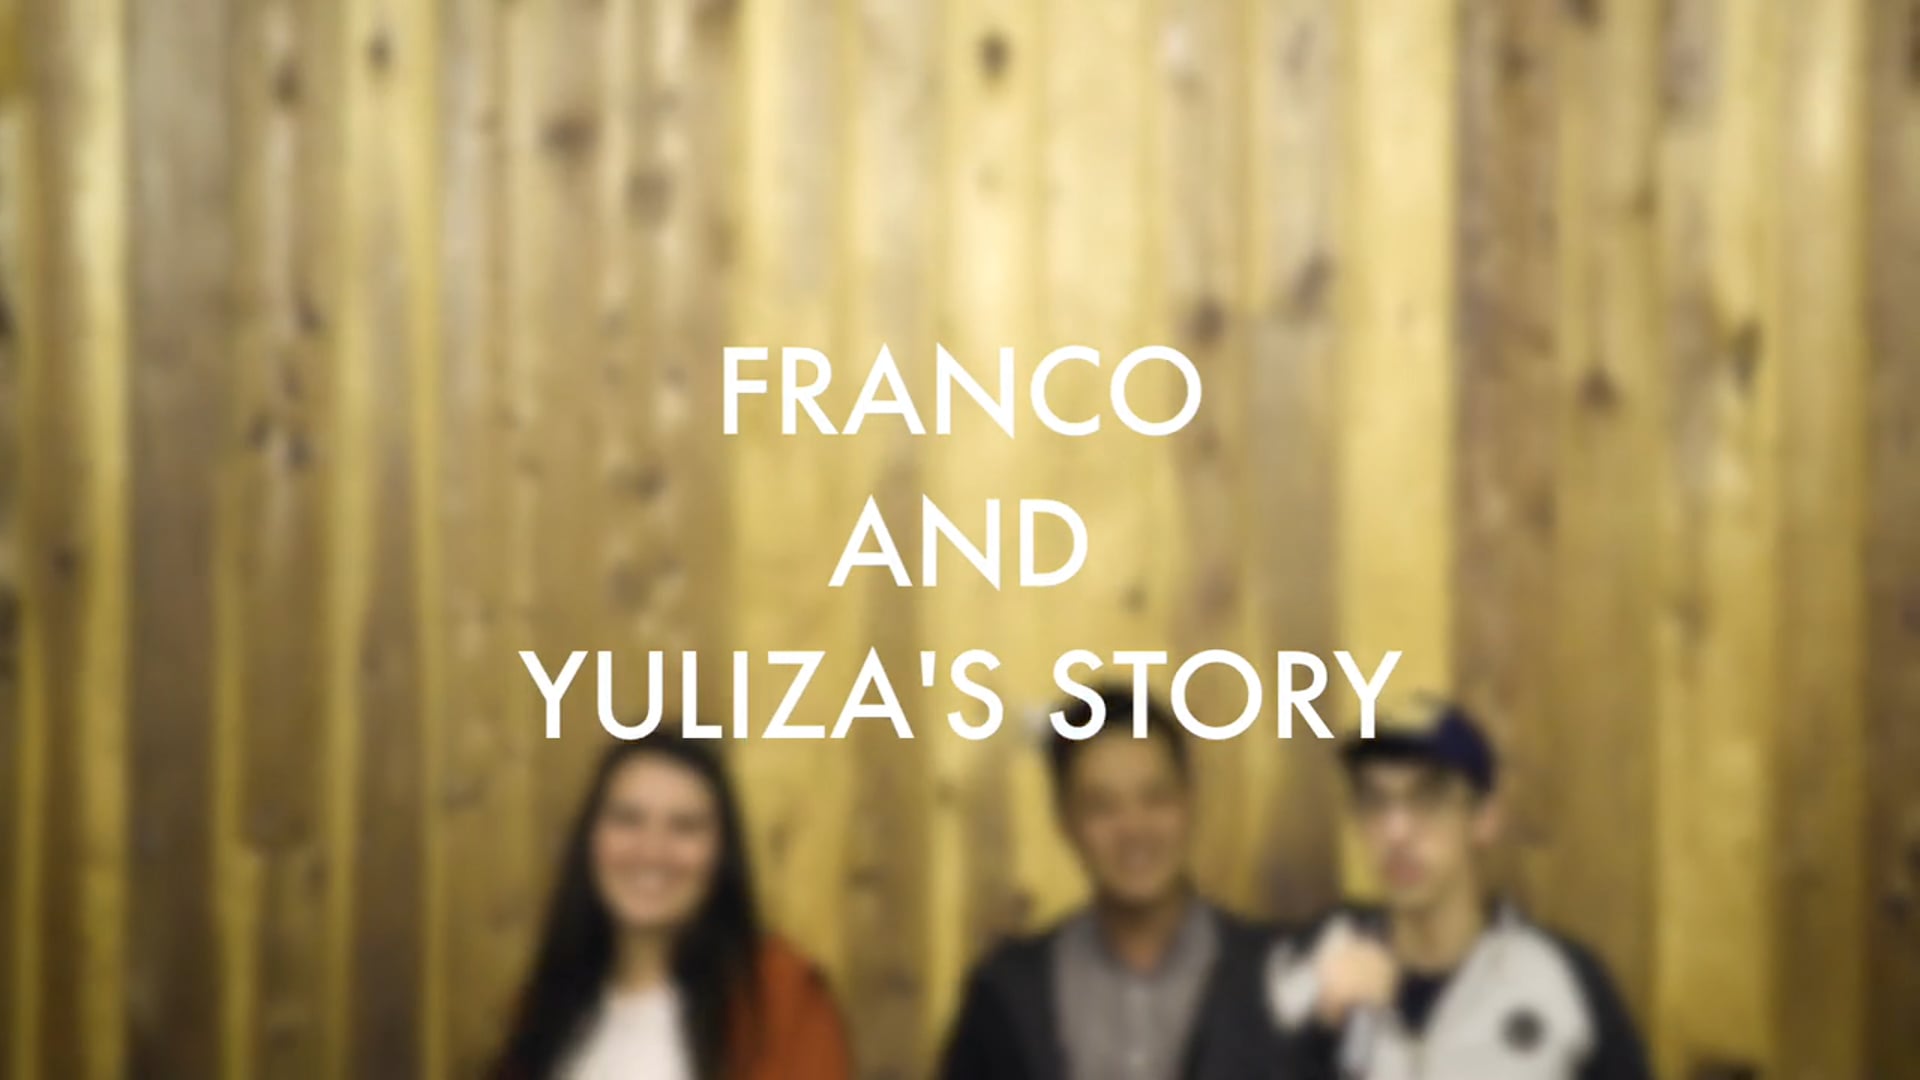 Franco and Yuliza's Story